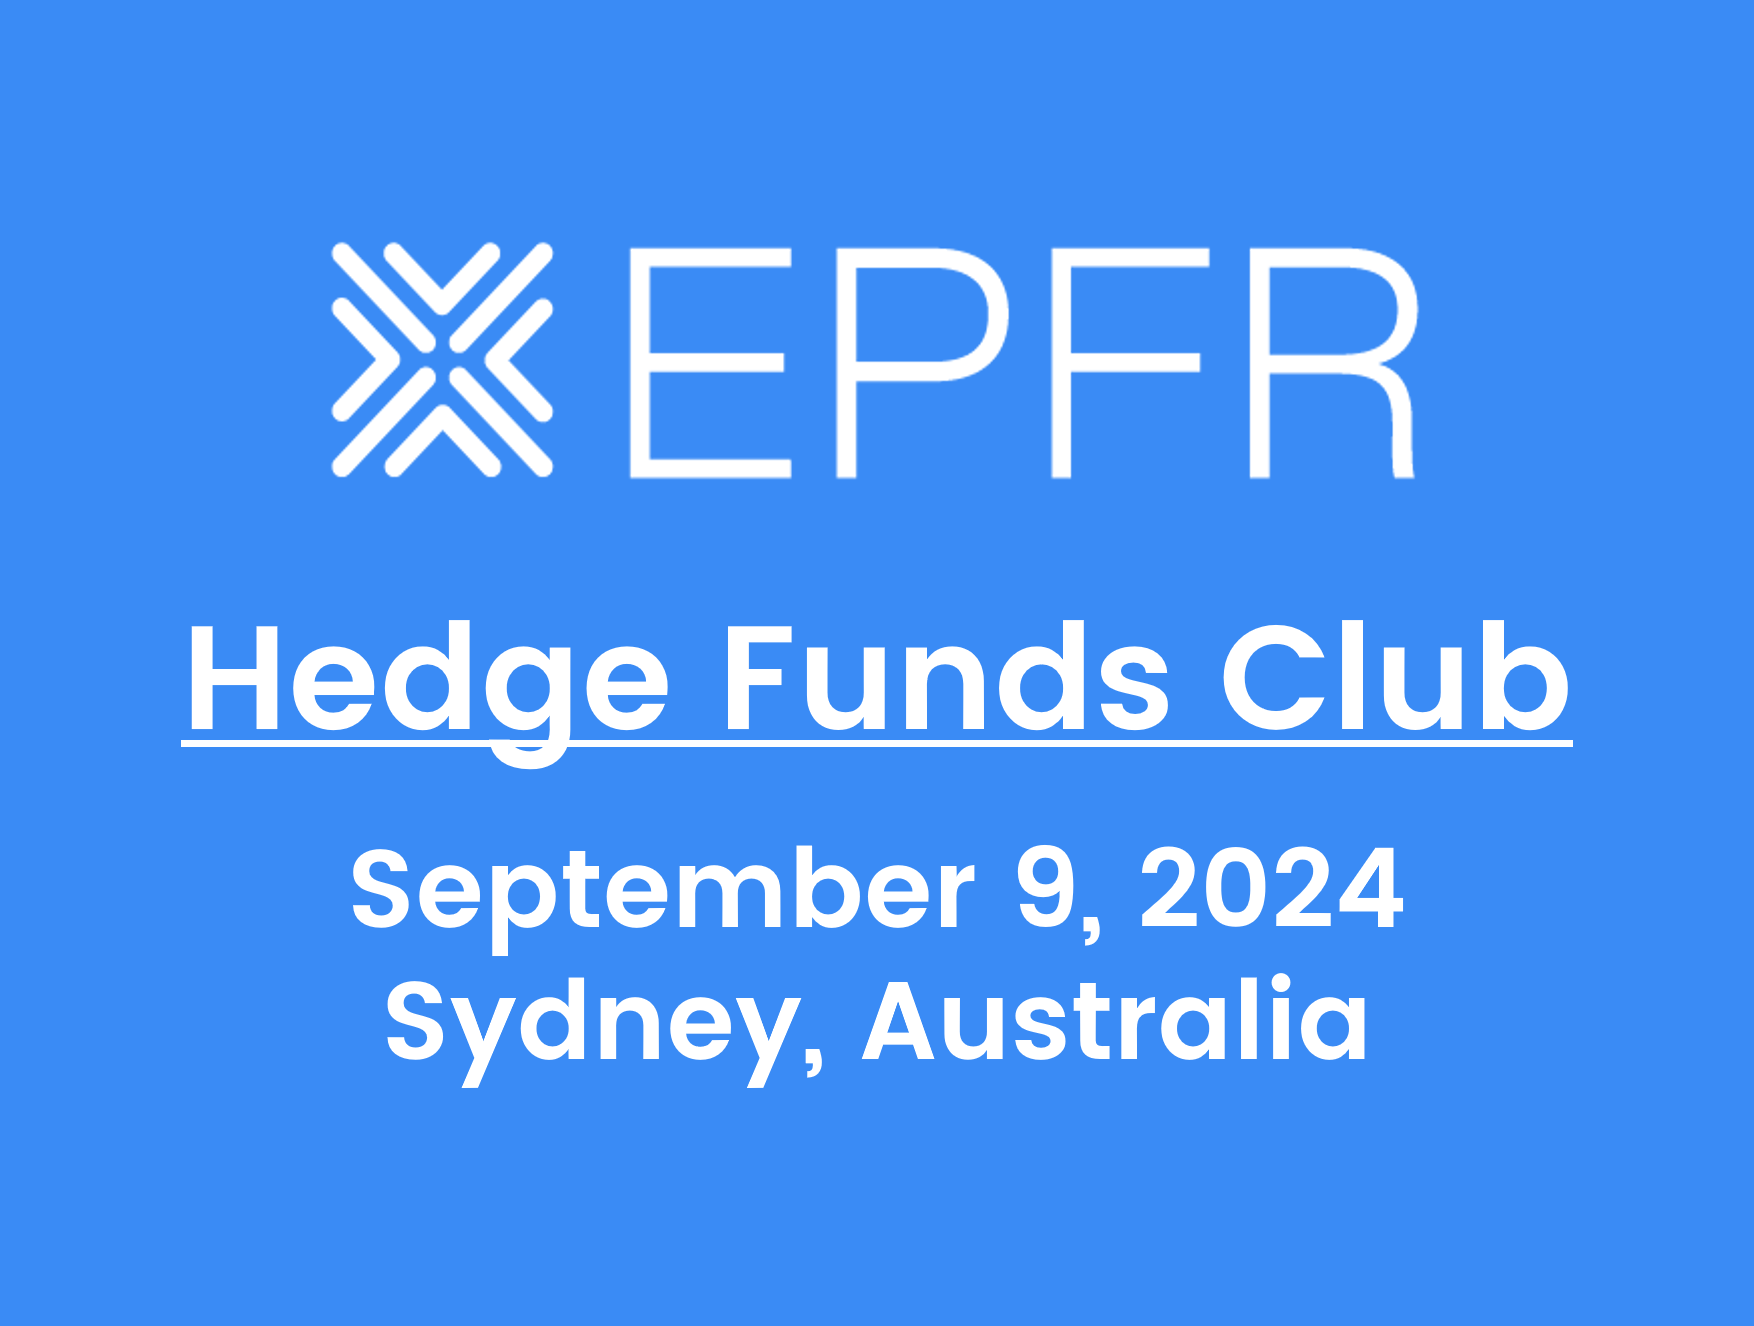 "EPFR Hedge Funds Club, September 9, 2024 - Sydney, Australia"